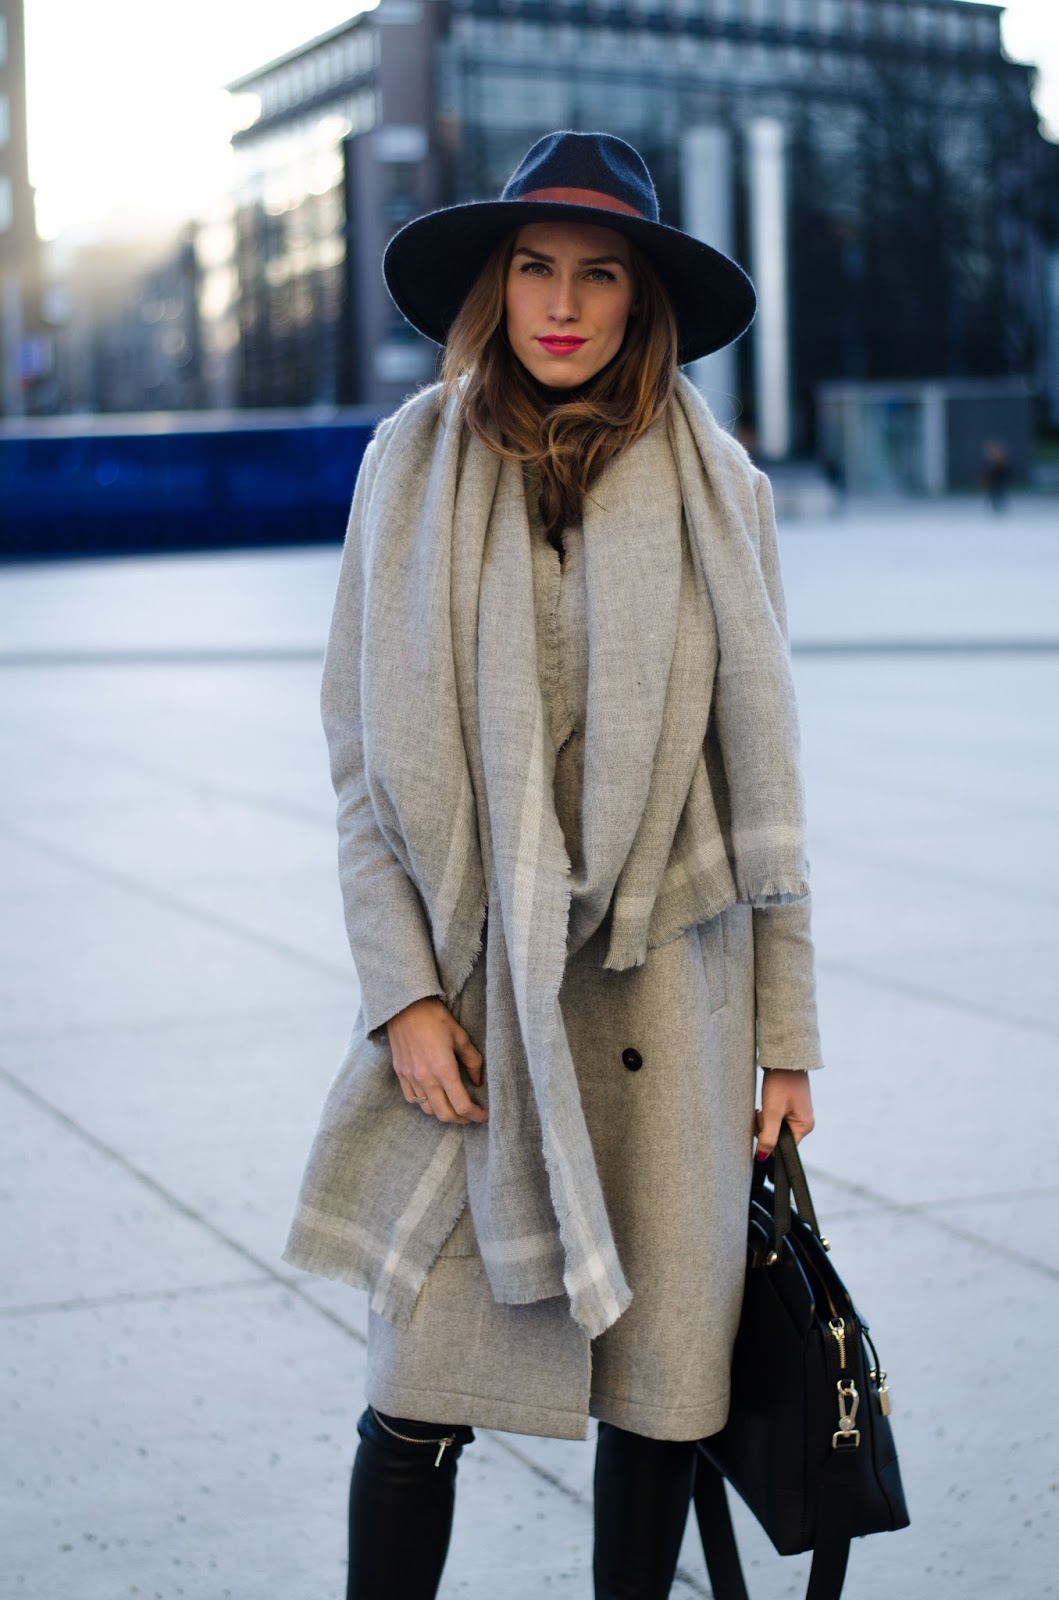 kristjaana mere gray wool coat long scarf fedora hat winter fashion